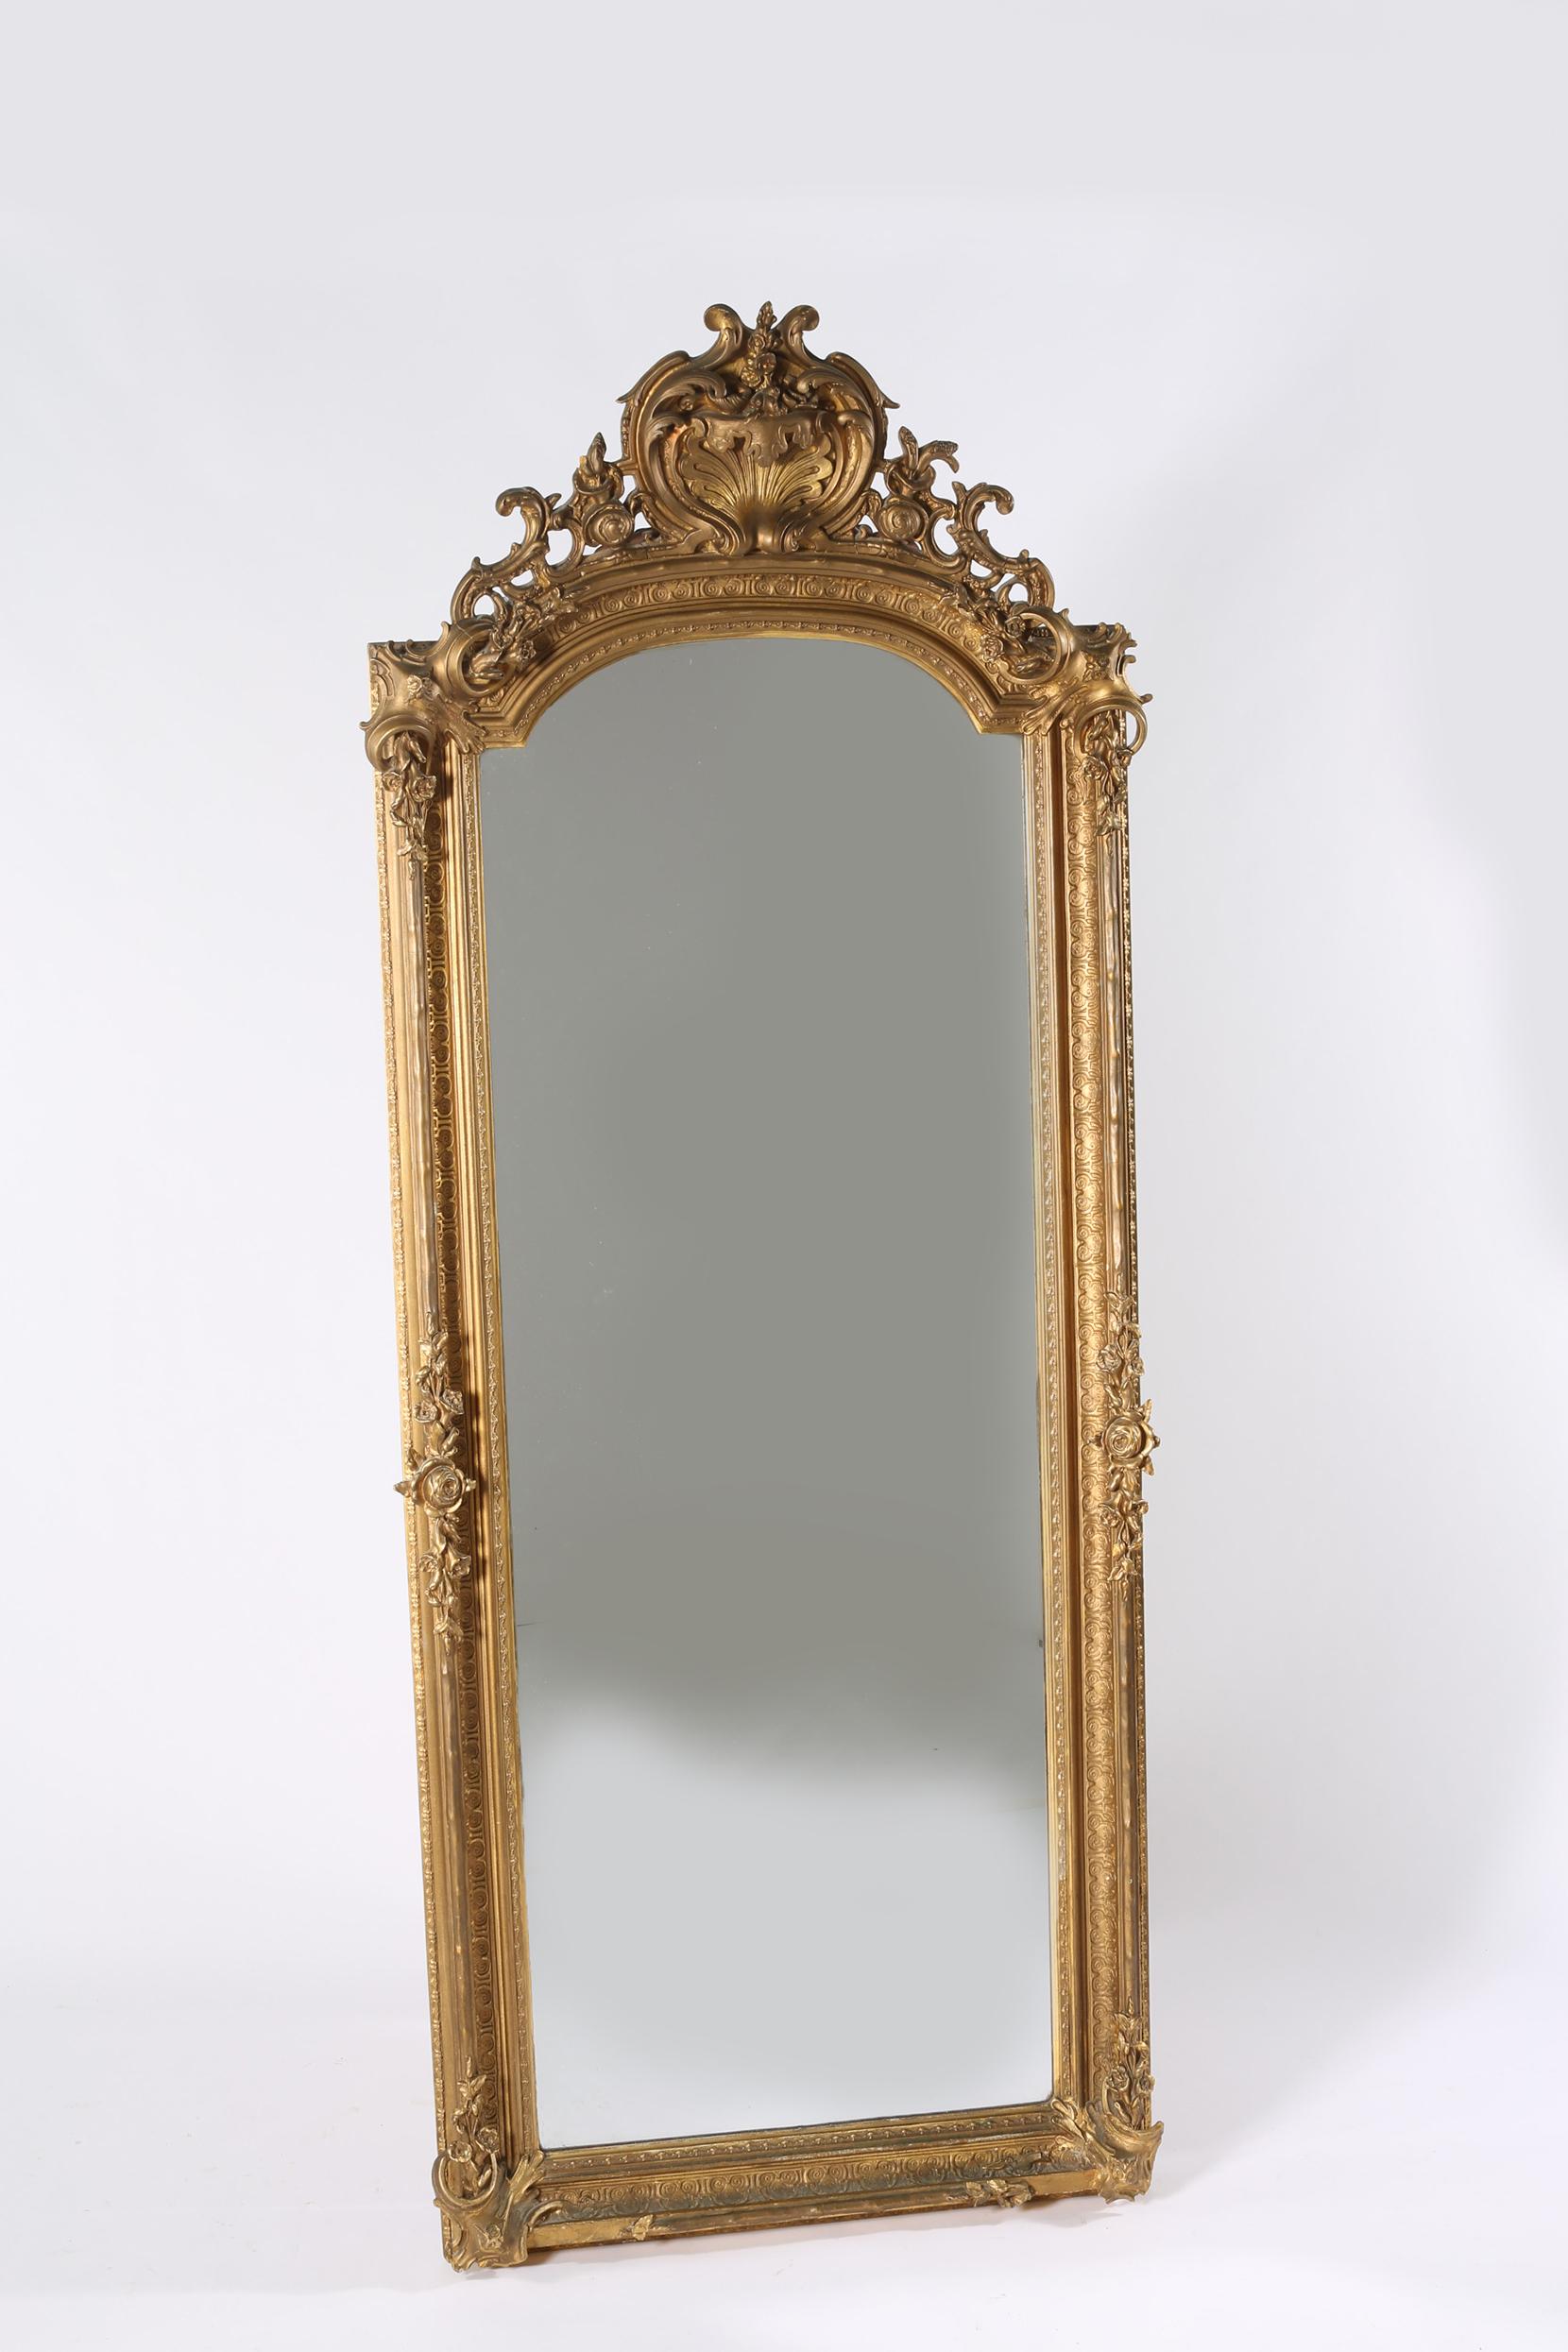 European 19th Century Giltwood Framed Hanging Wall Mirror